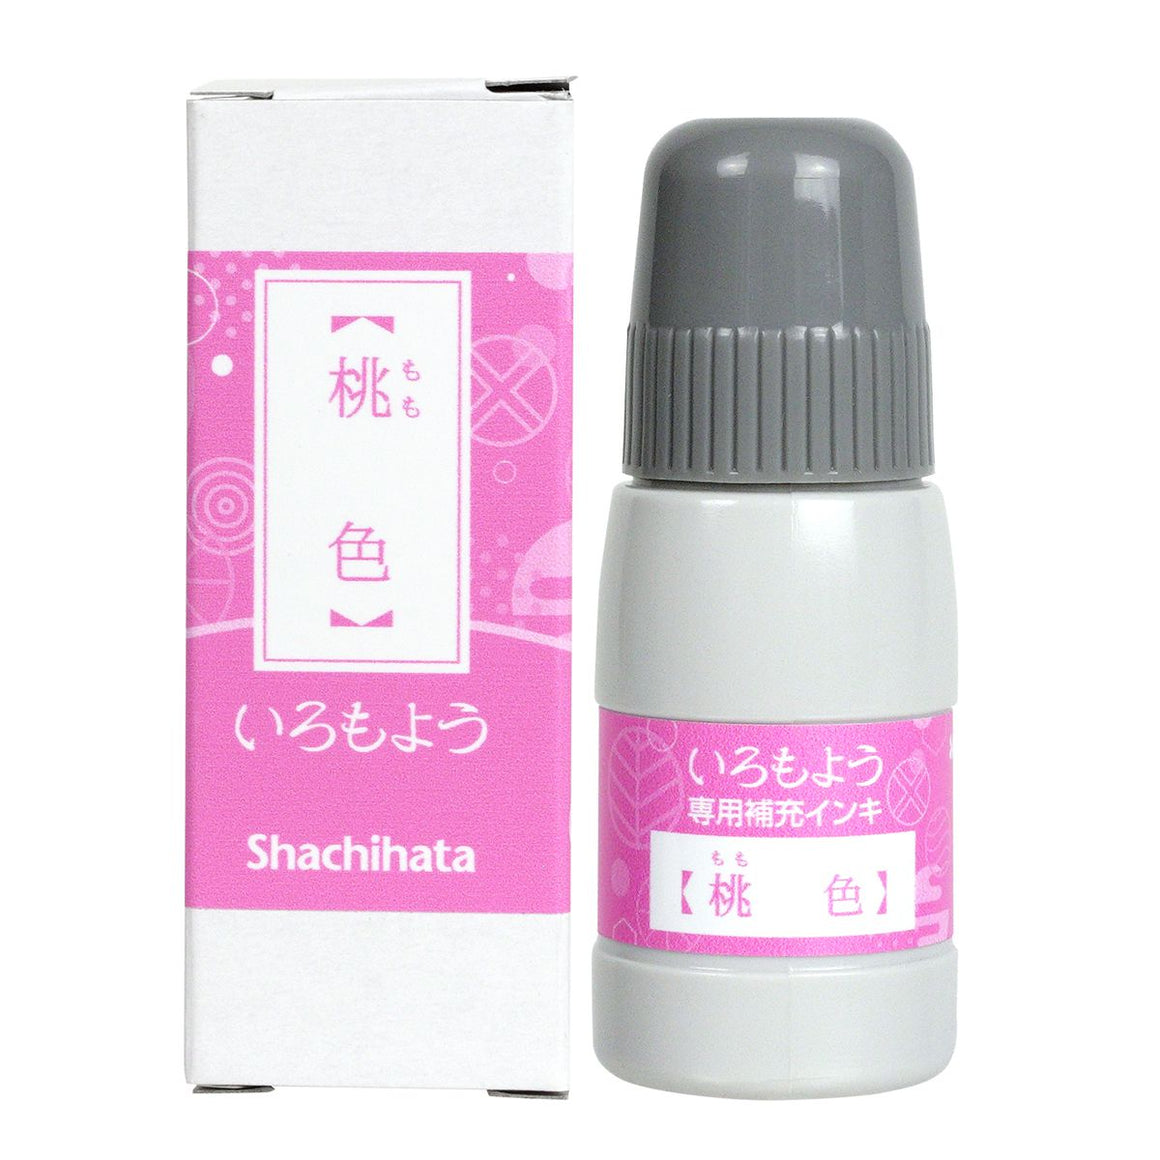 REFILL: Shachihata Iromoyo Ink Refill Bottle - Pink - Momoiro 桃色 - SAC-20-LP